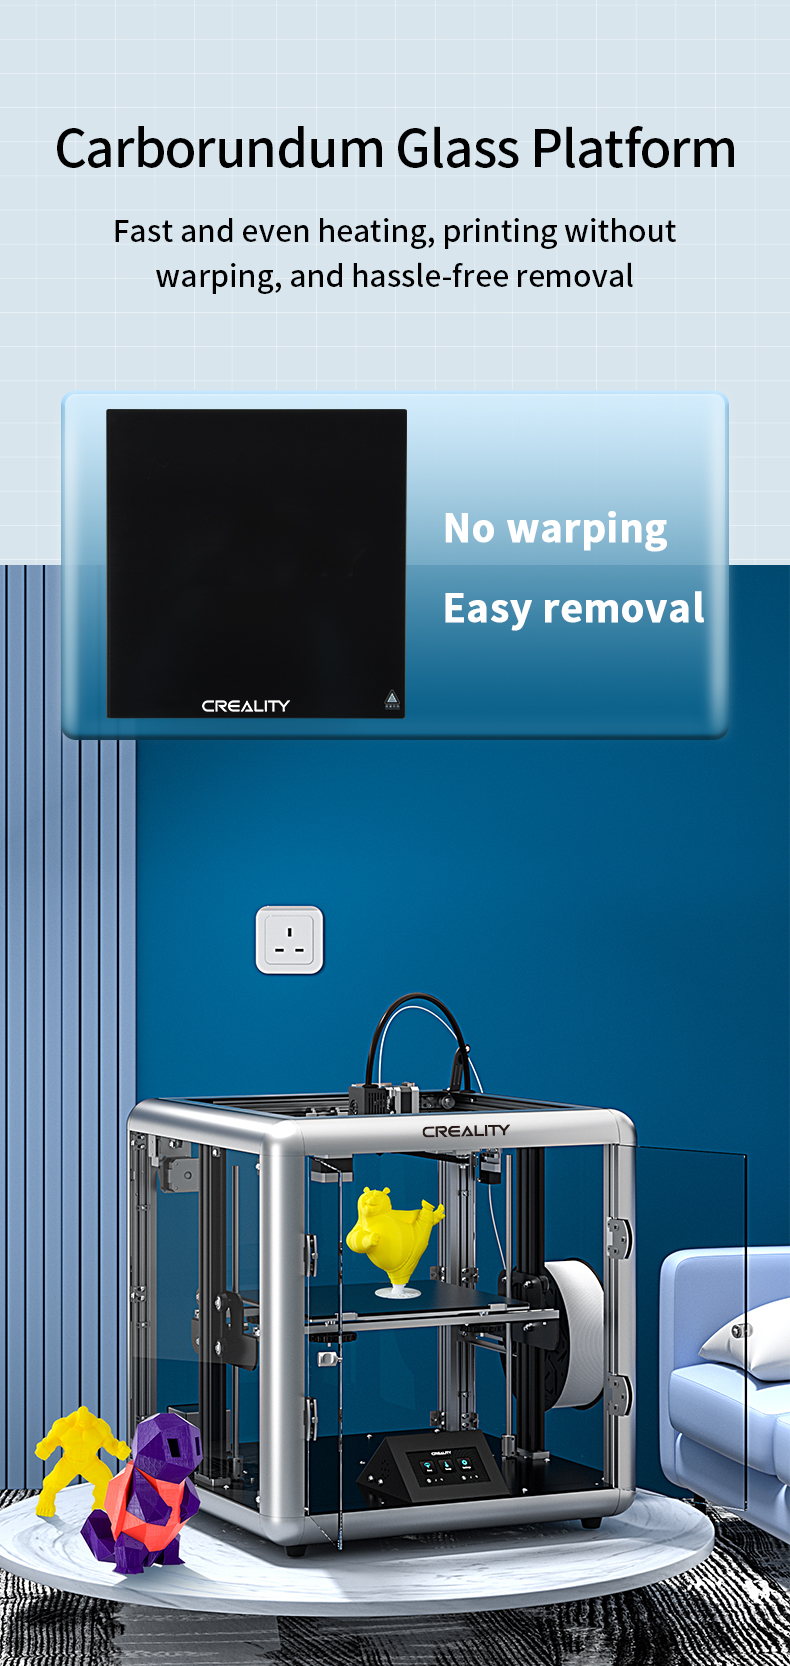 Creality Sermoon D1 Enclosed 3D Printer, Print Volume: 280*260*310